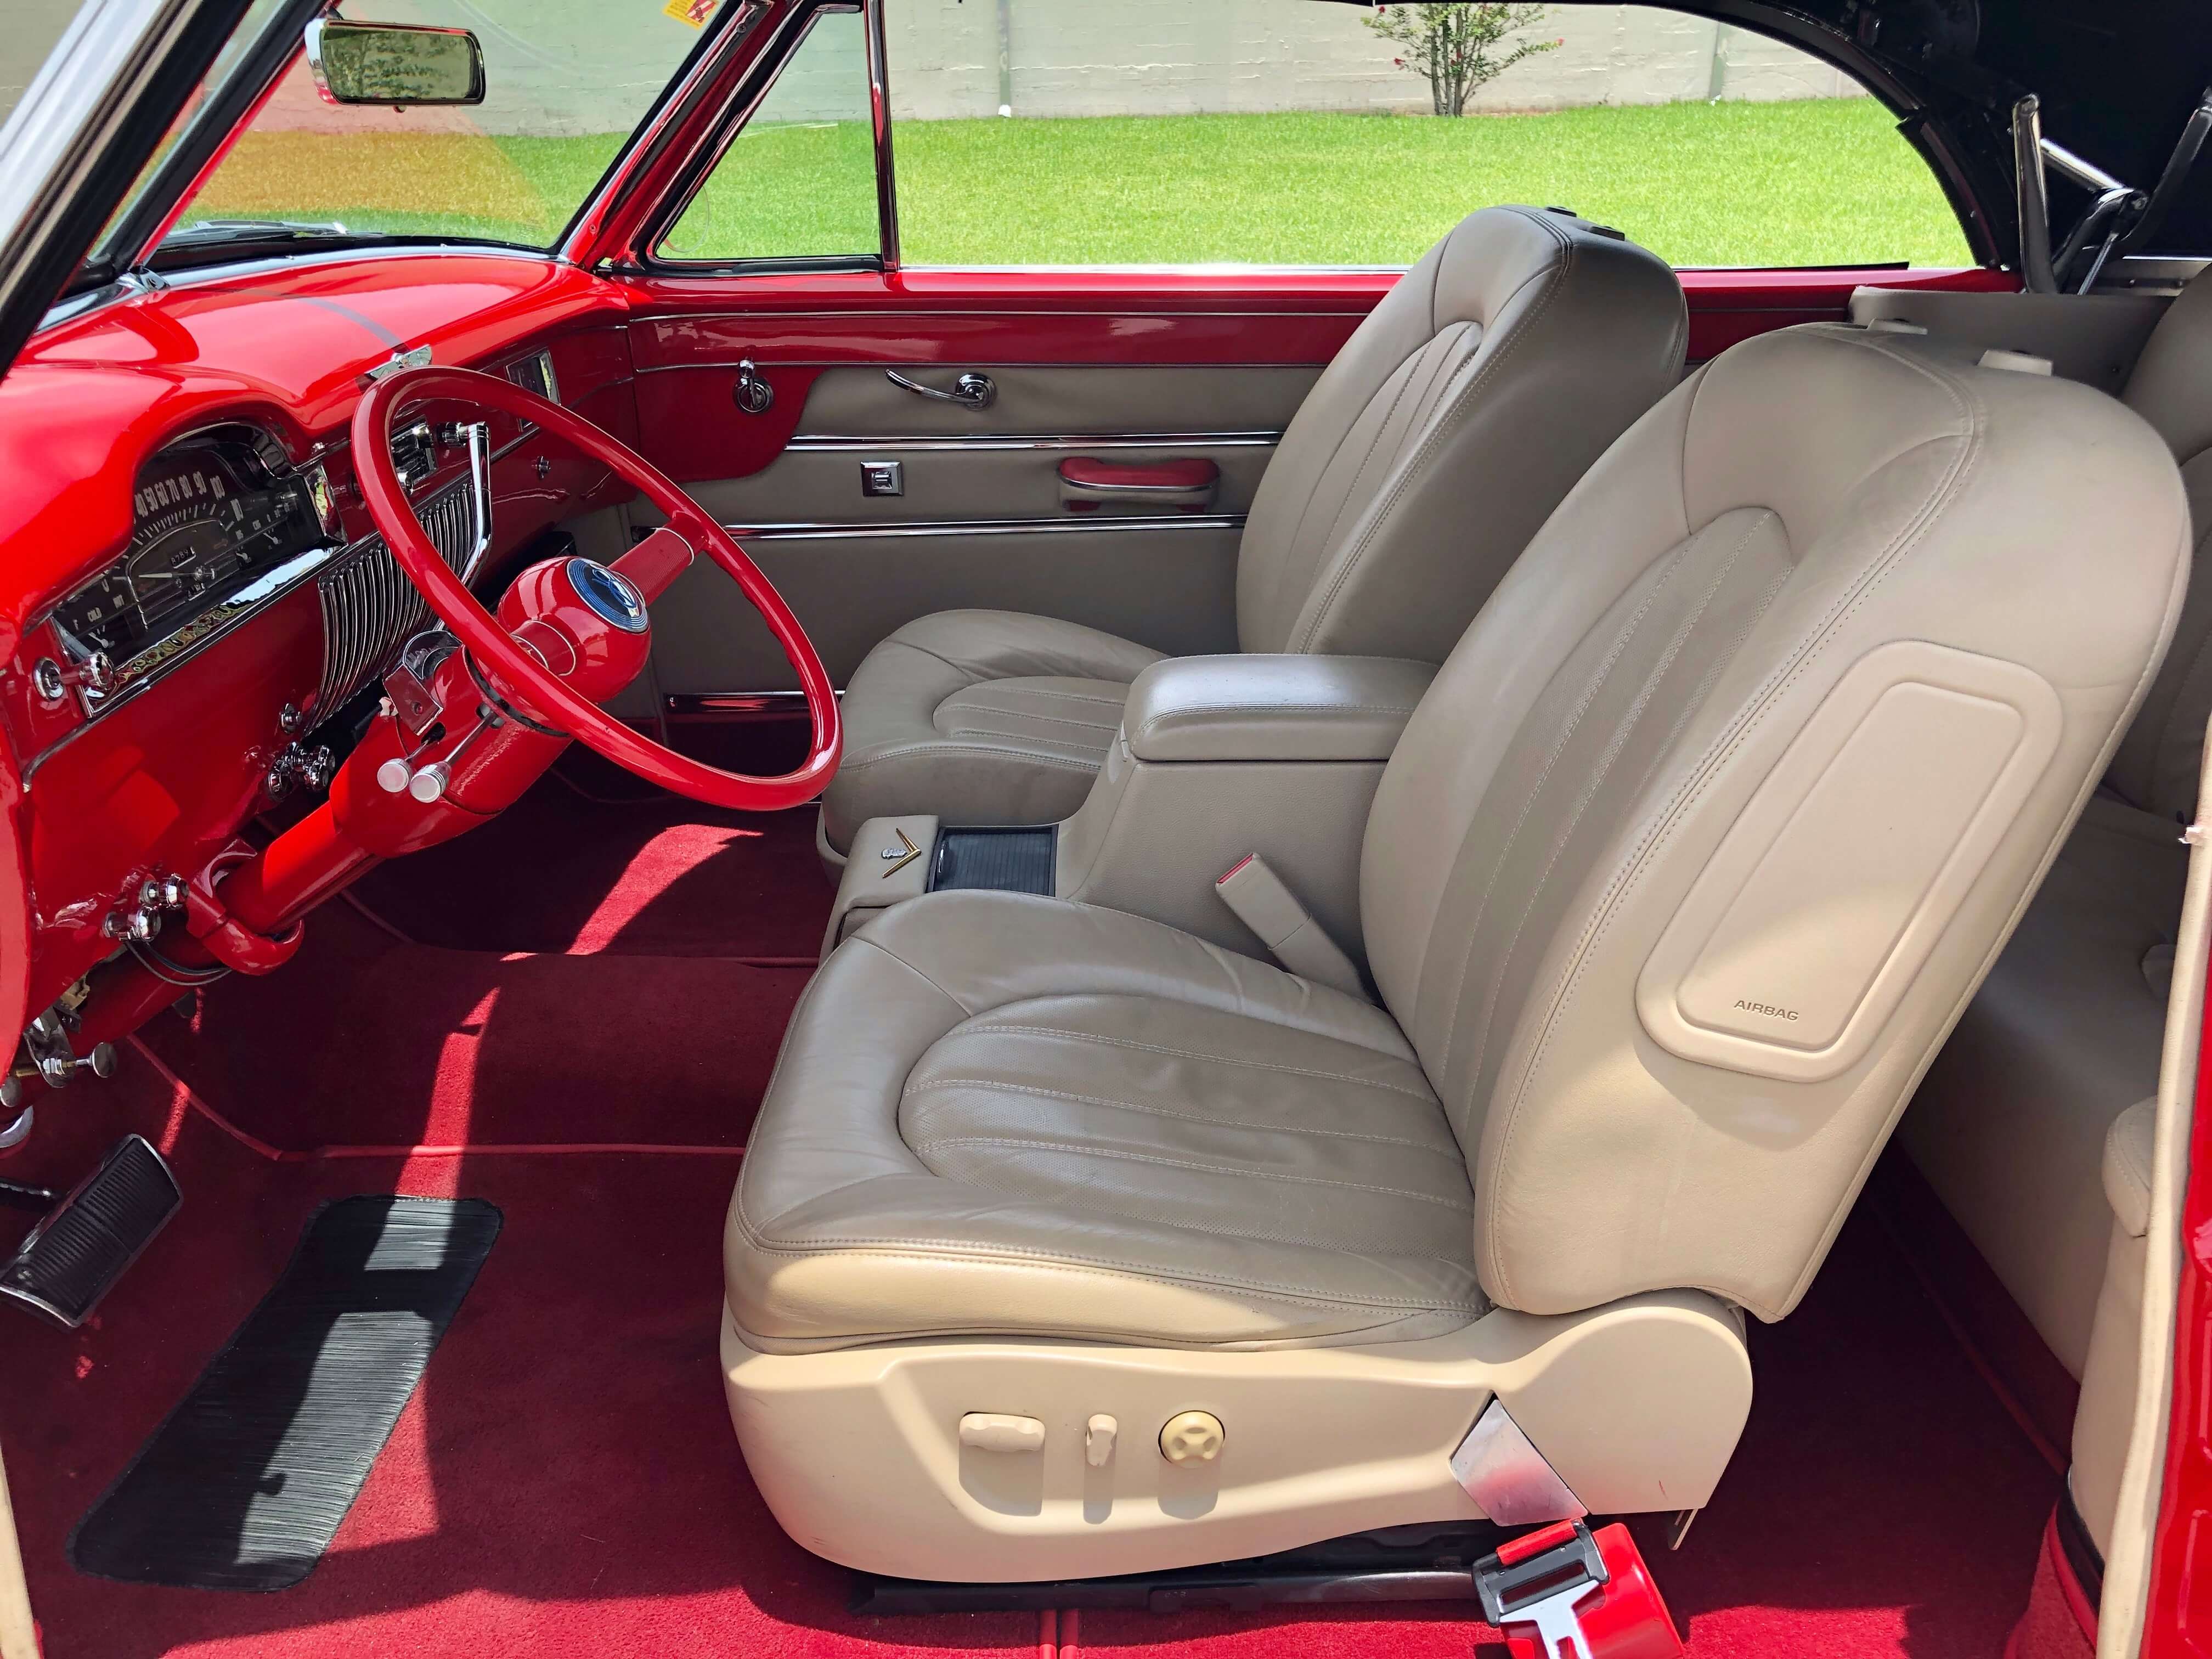 1949 Cadillac Convertible interior